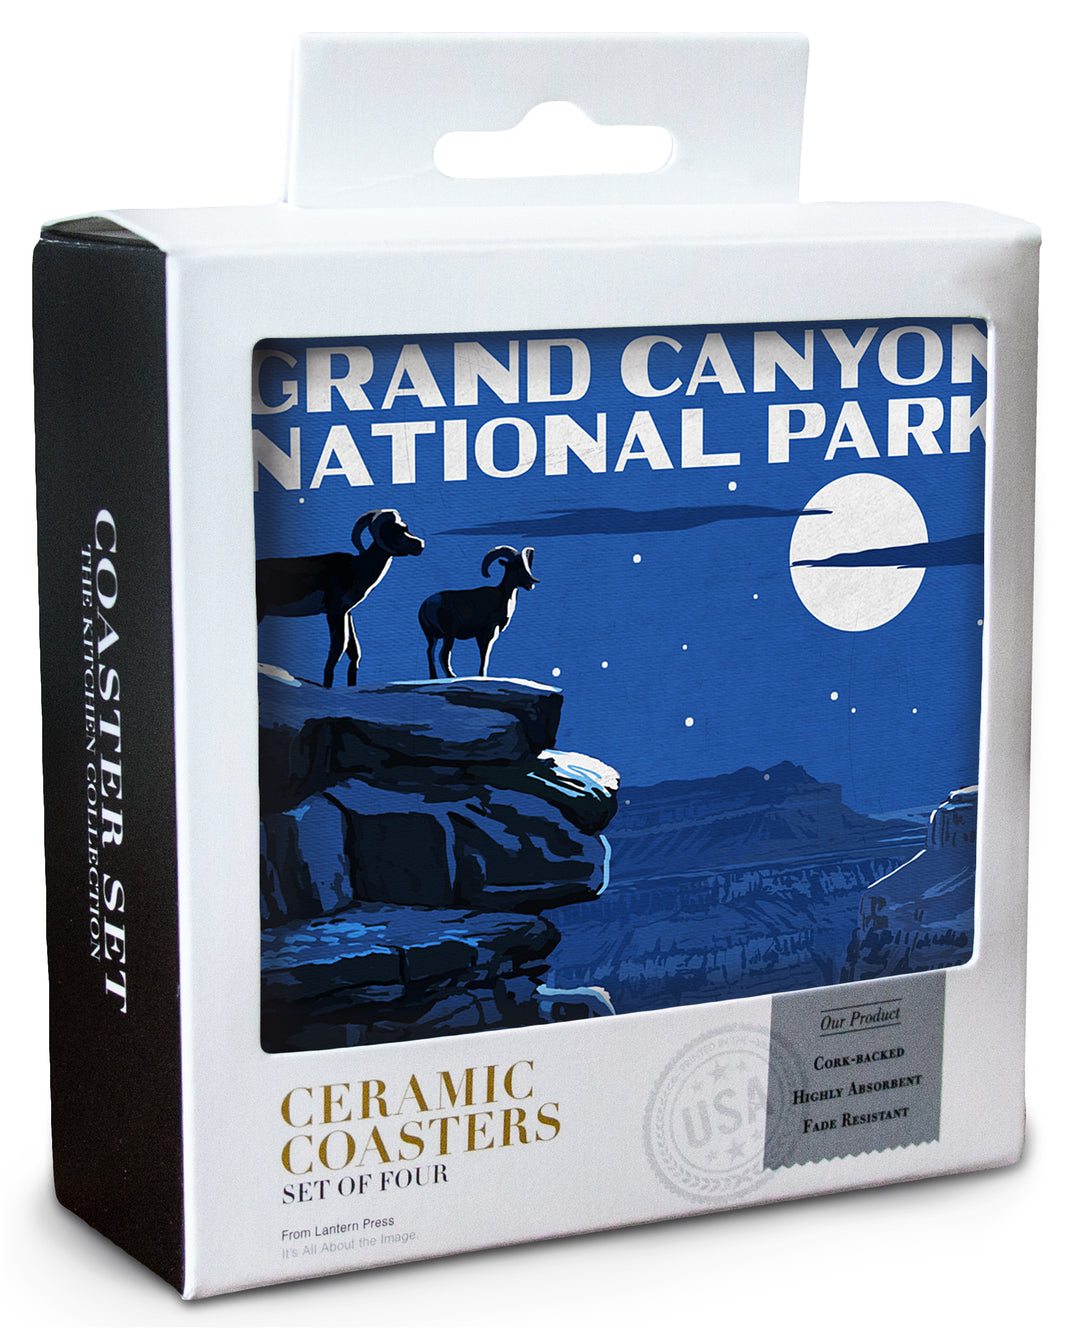 Grand Canyon National Park, Arizona, Night Scene, Coaster Set